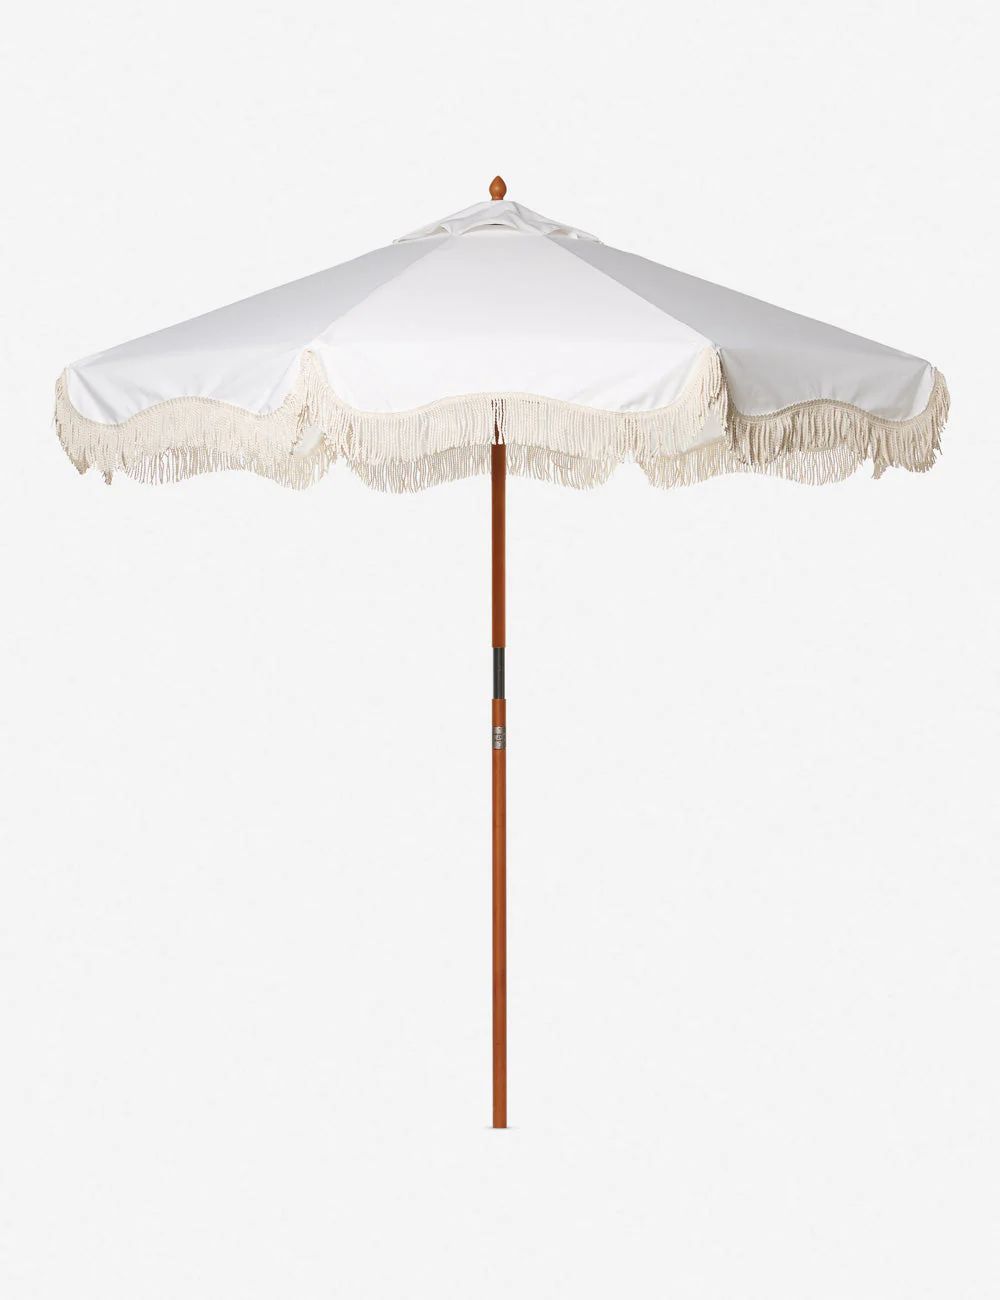 Market Umbrella by Business & Pleasure Co. | Lulu and Georgia 